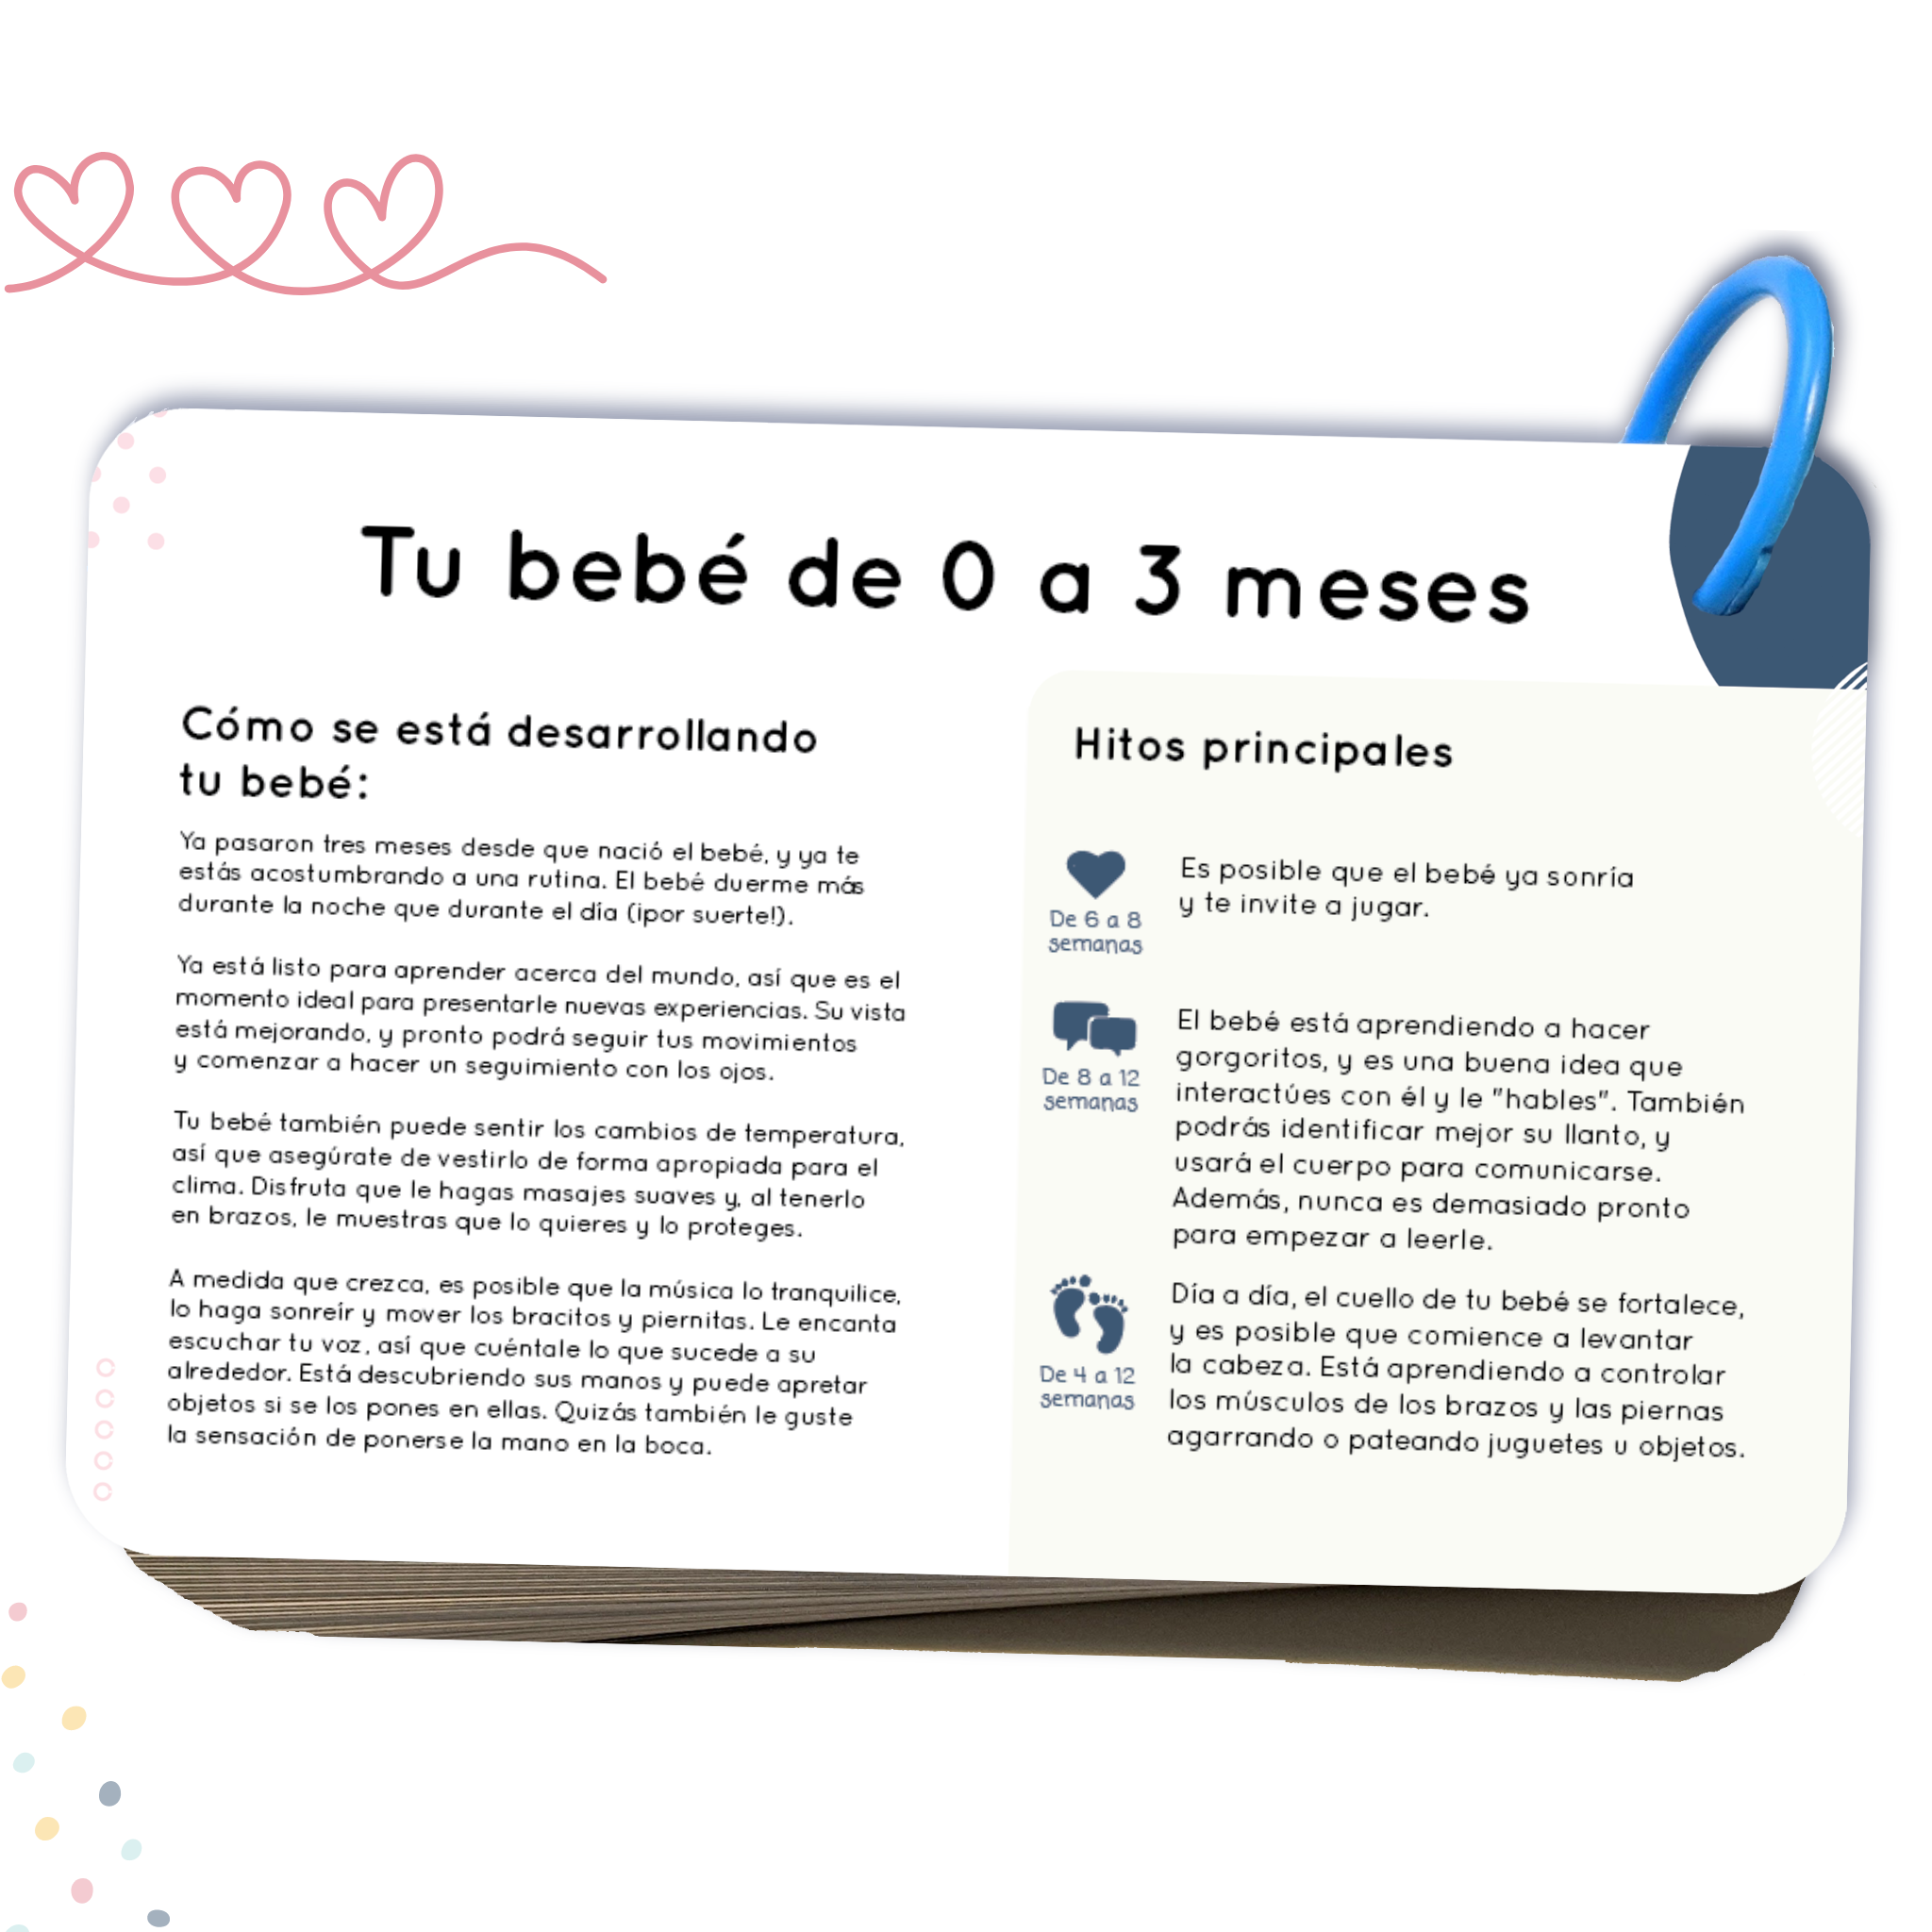 Spanish Curious Baby Activity Cards - Tarjetas de Actividades de Curious Baby (en Español)